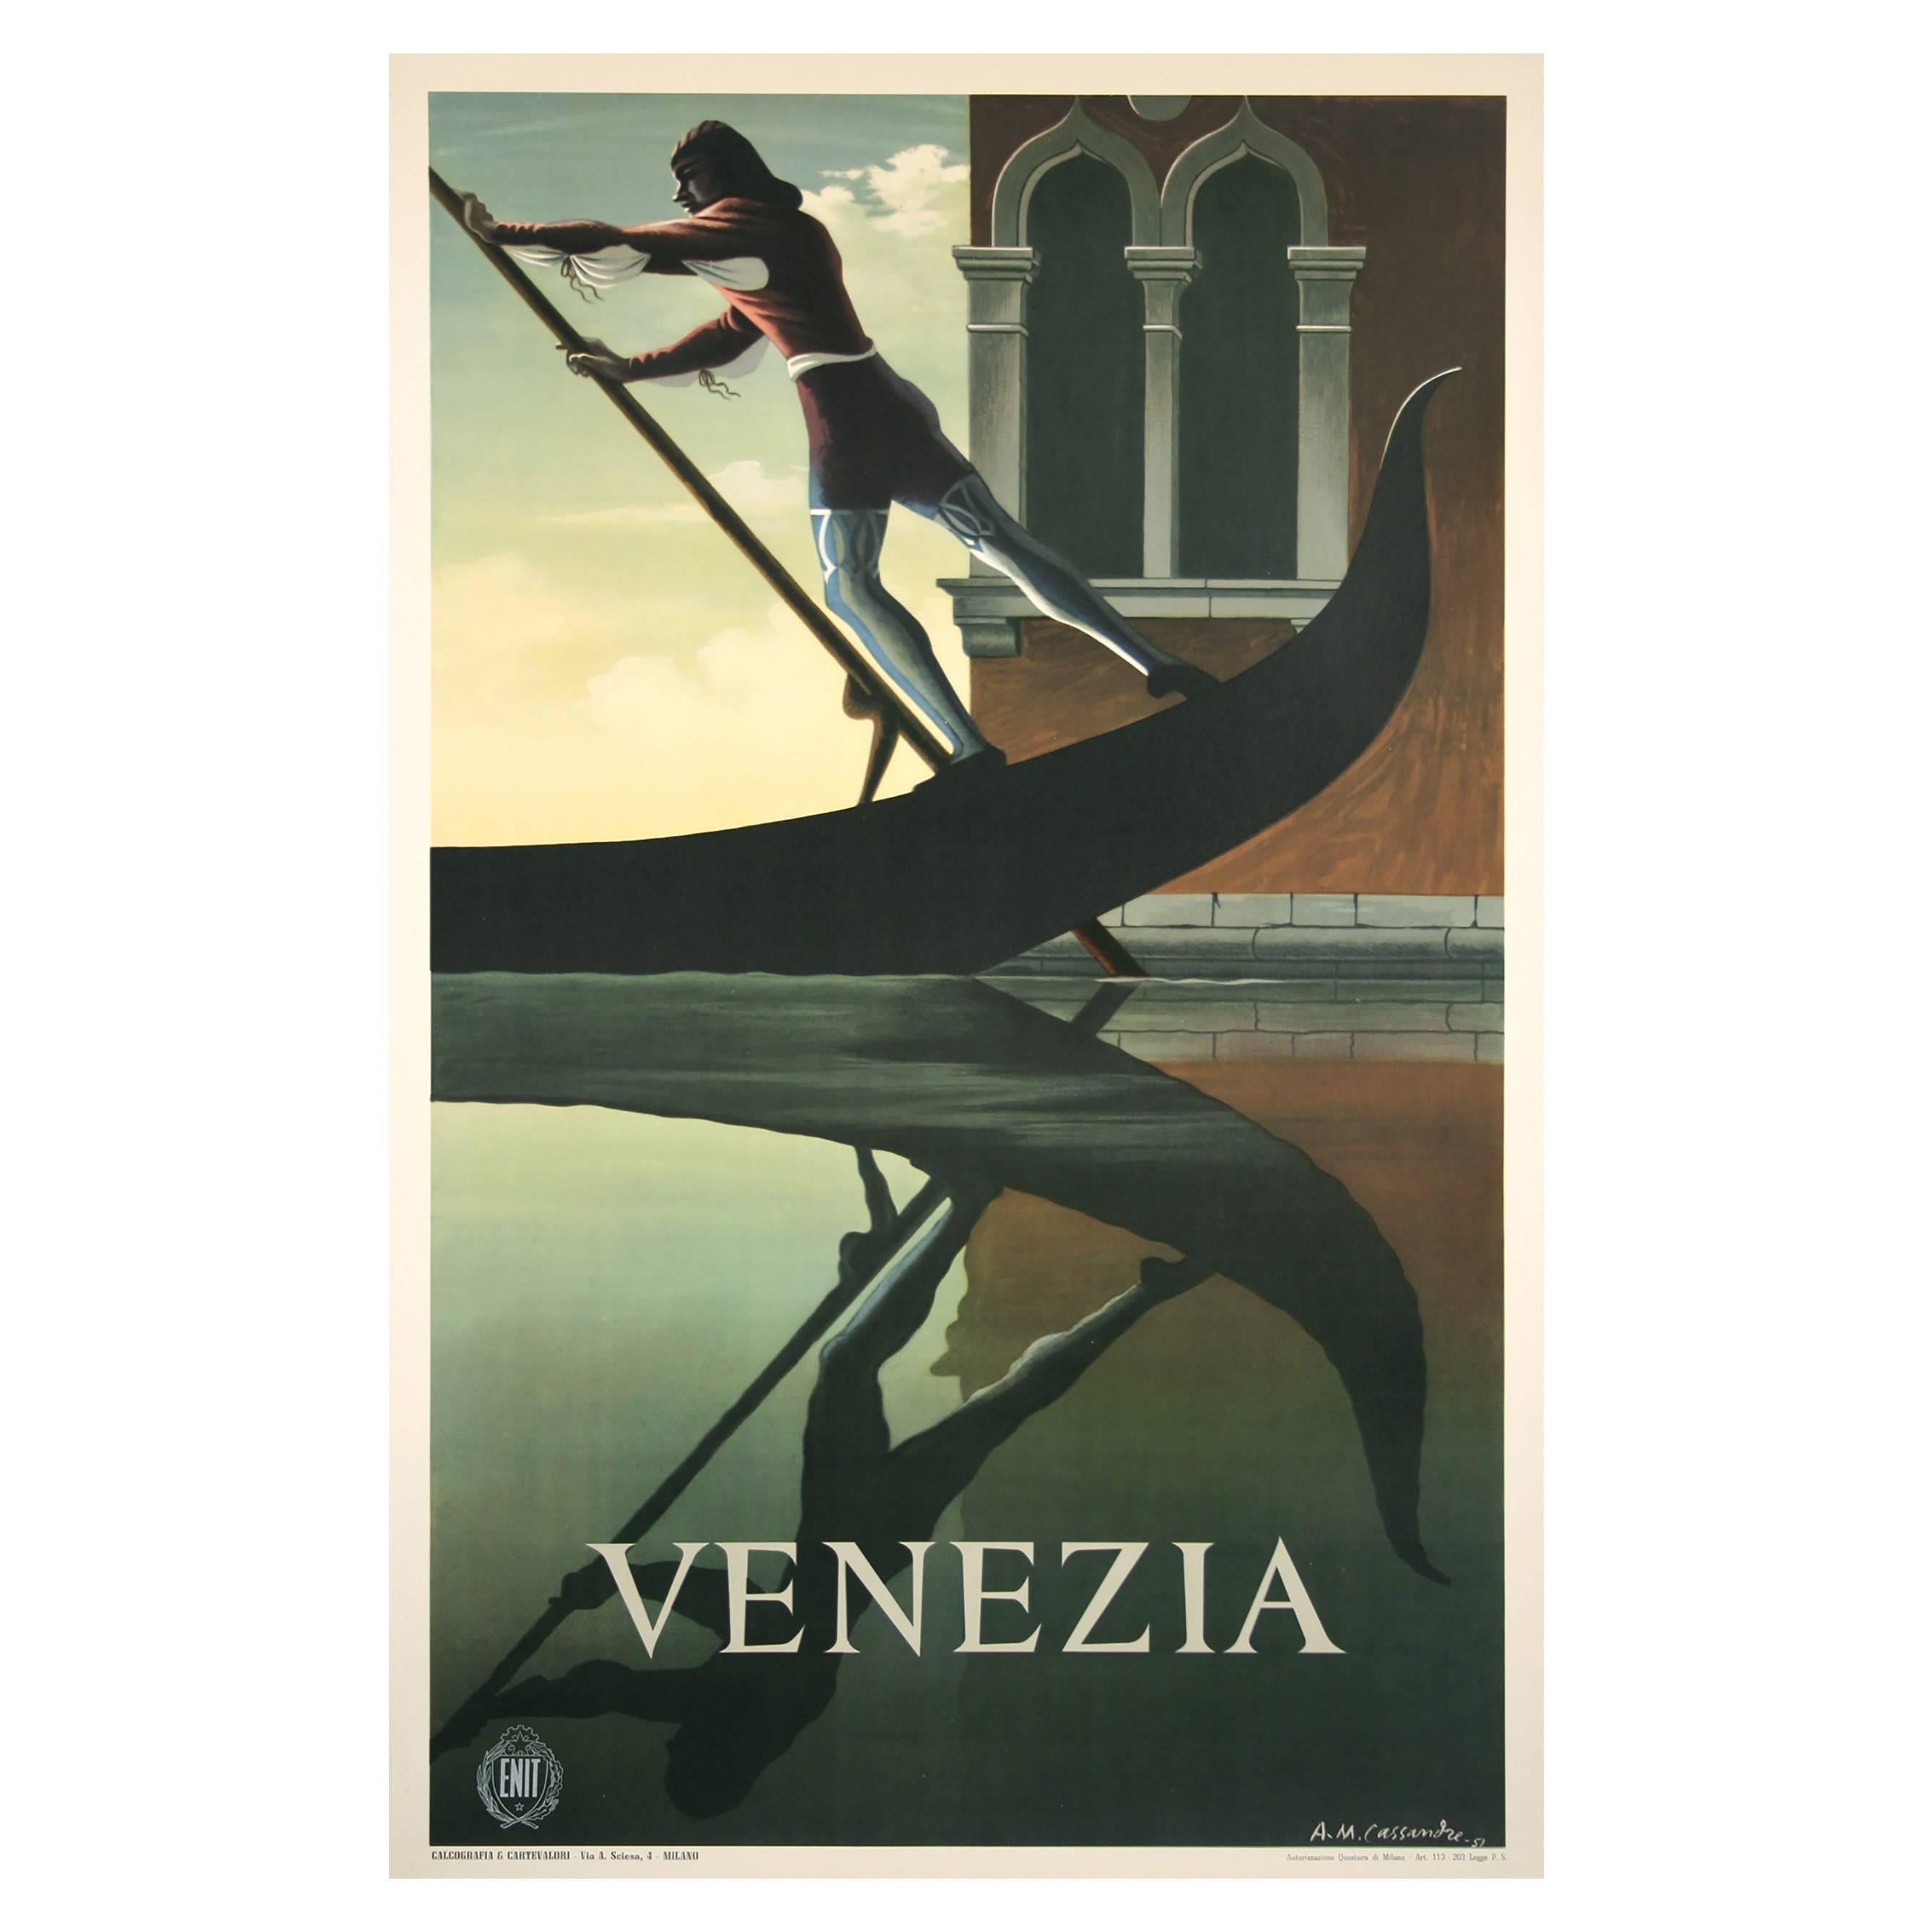 "Venezia, " an Italian Mid-Century Travel Poster by A.M. Cassandre, 1951